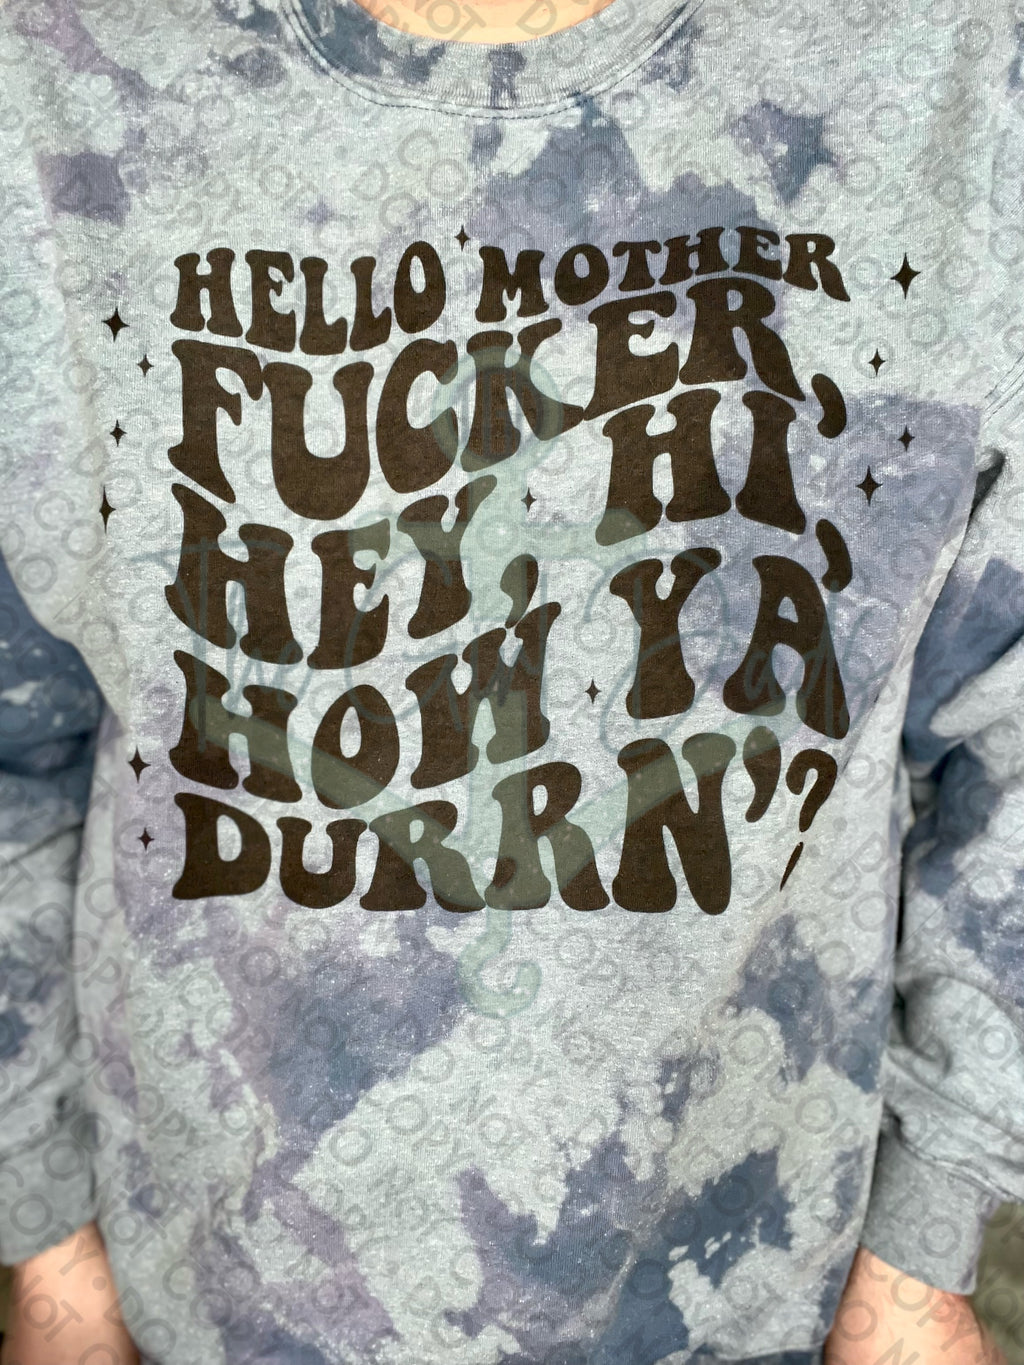 Hello Mother Fucker (Front & Back) Top Design